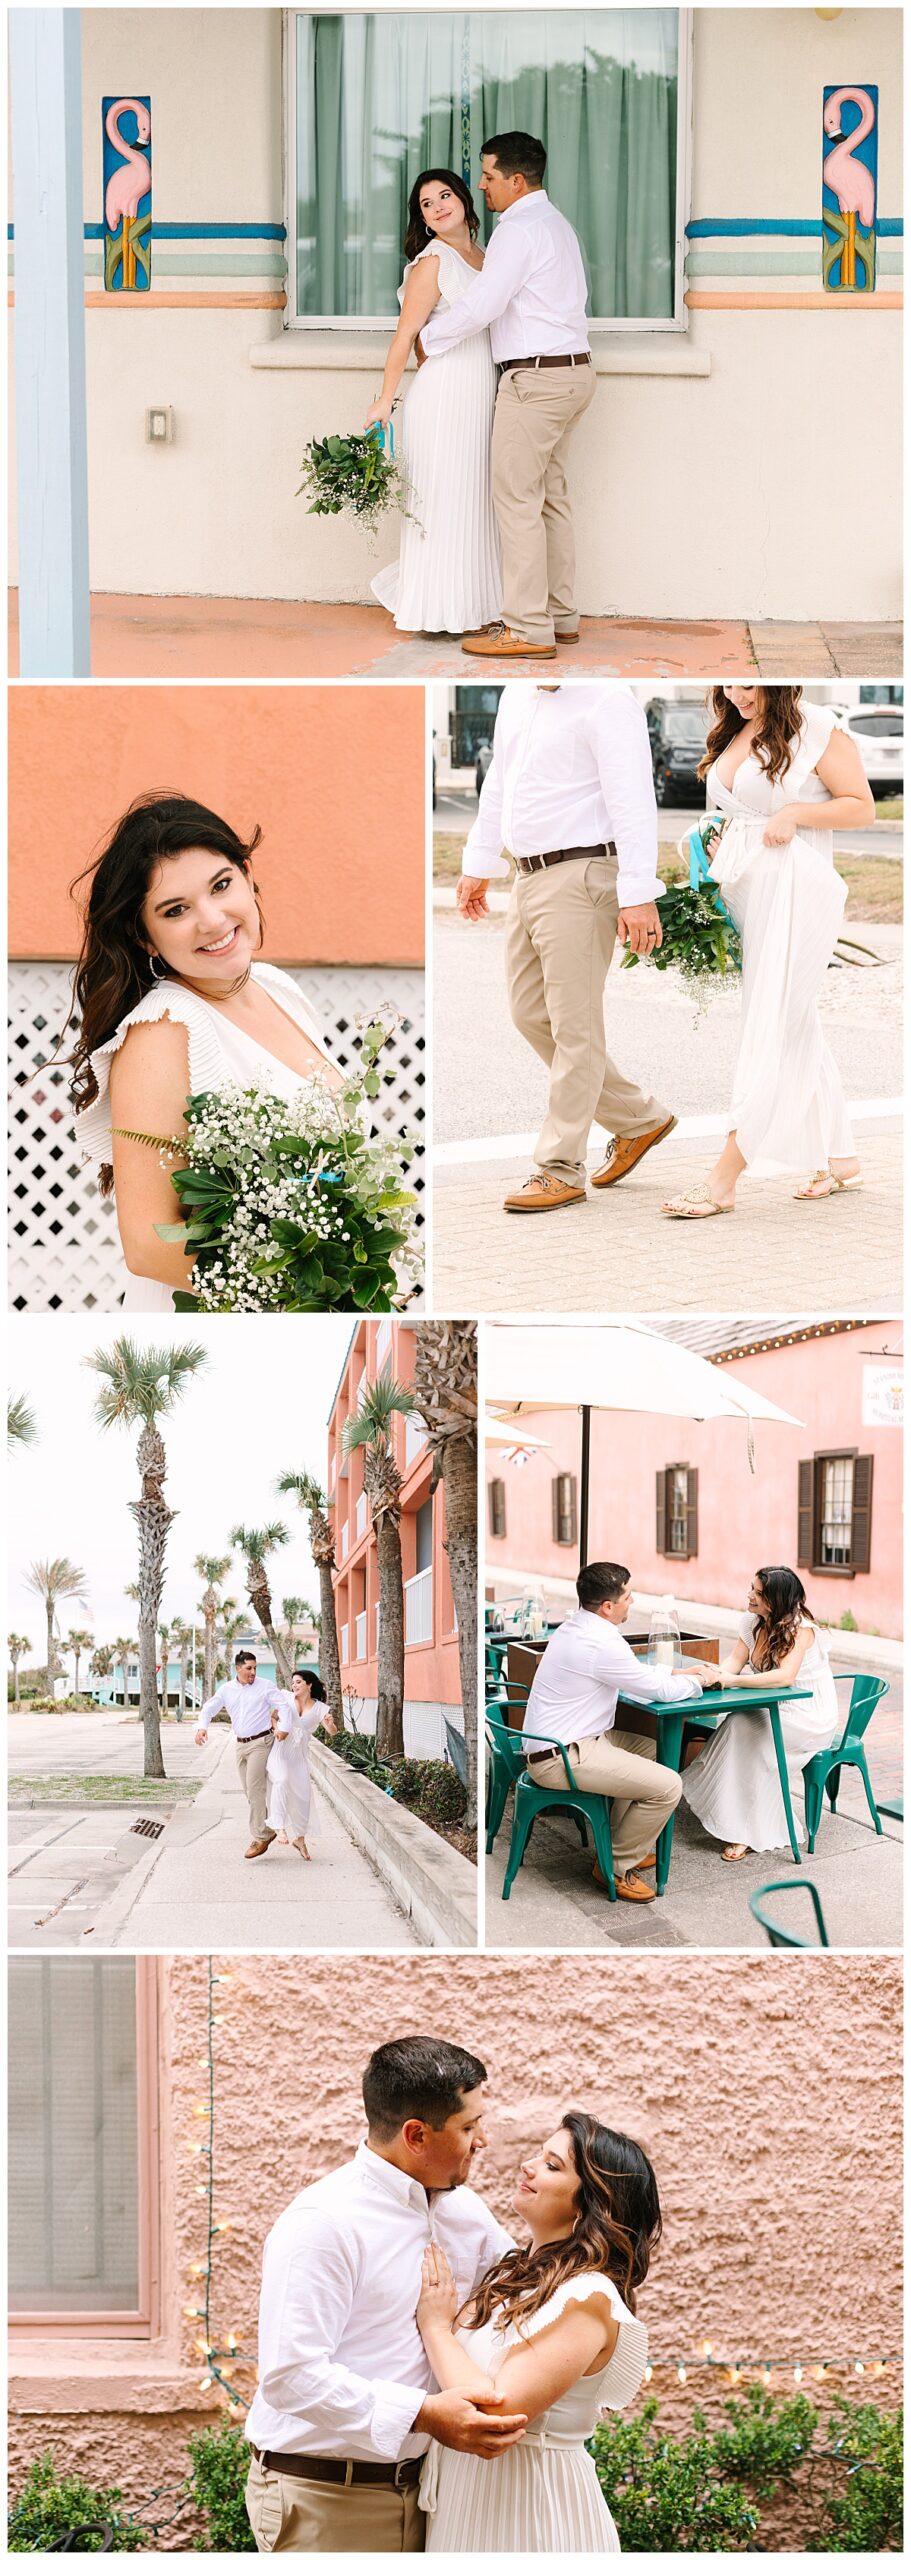 Florida newlyweds stroll together along the sidewalks of downtown St. Augustine following their beach wedding.